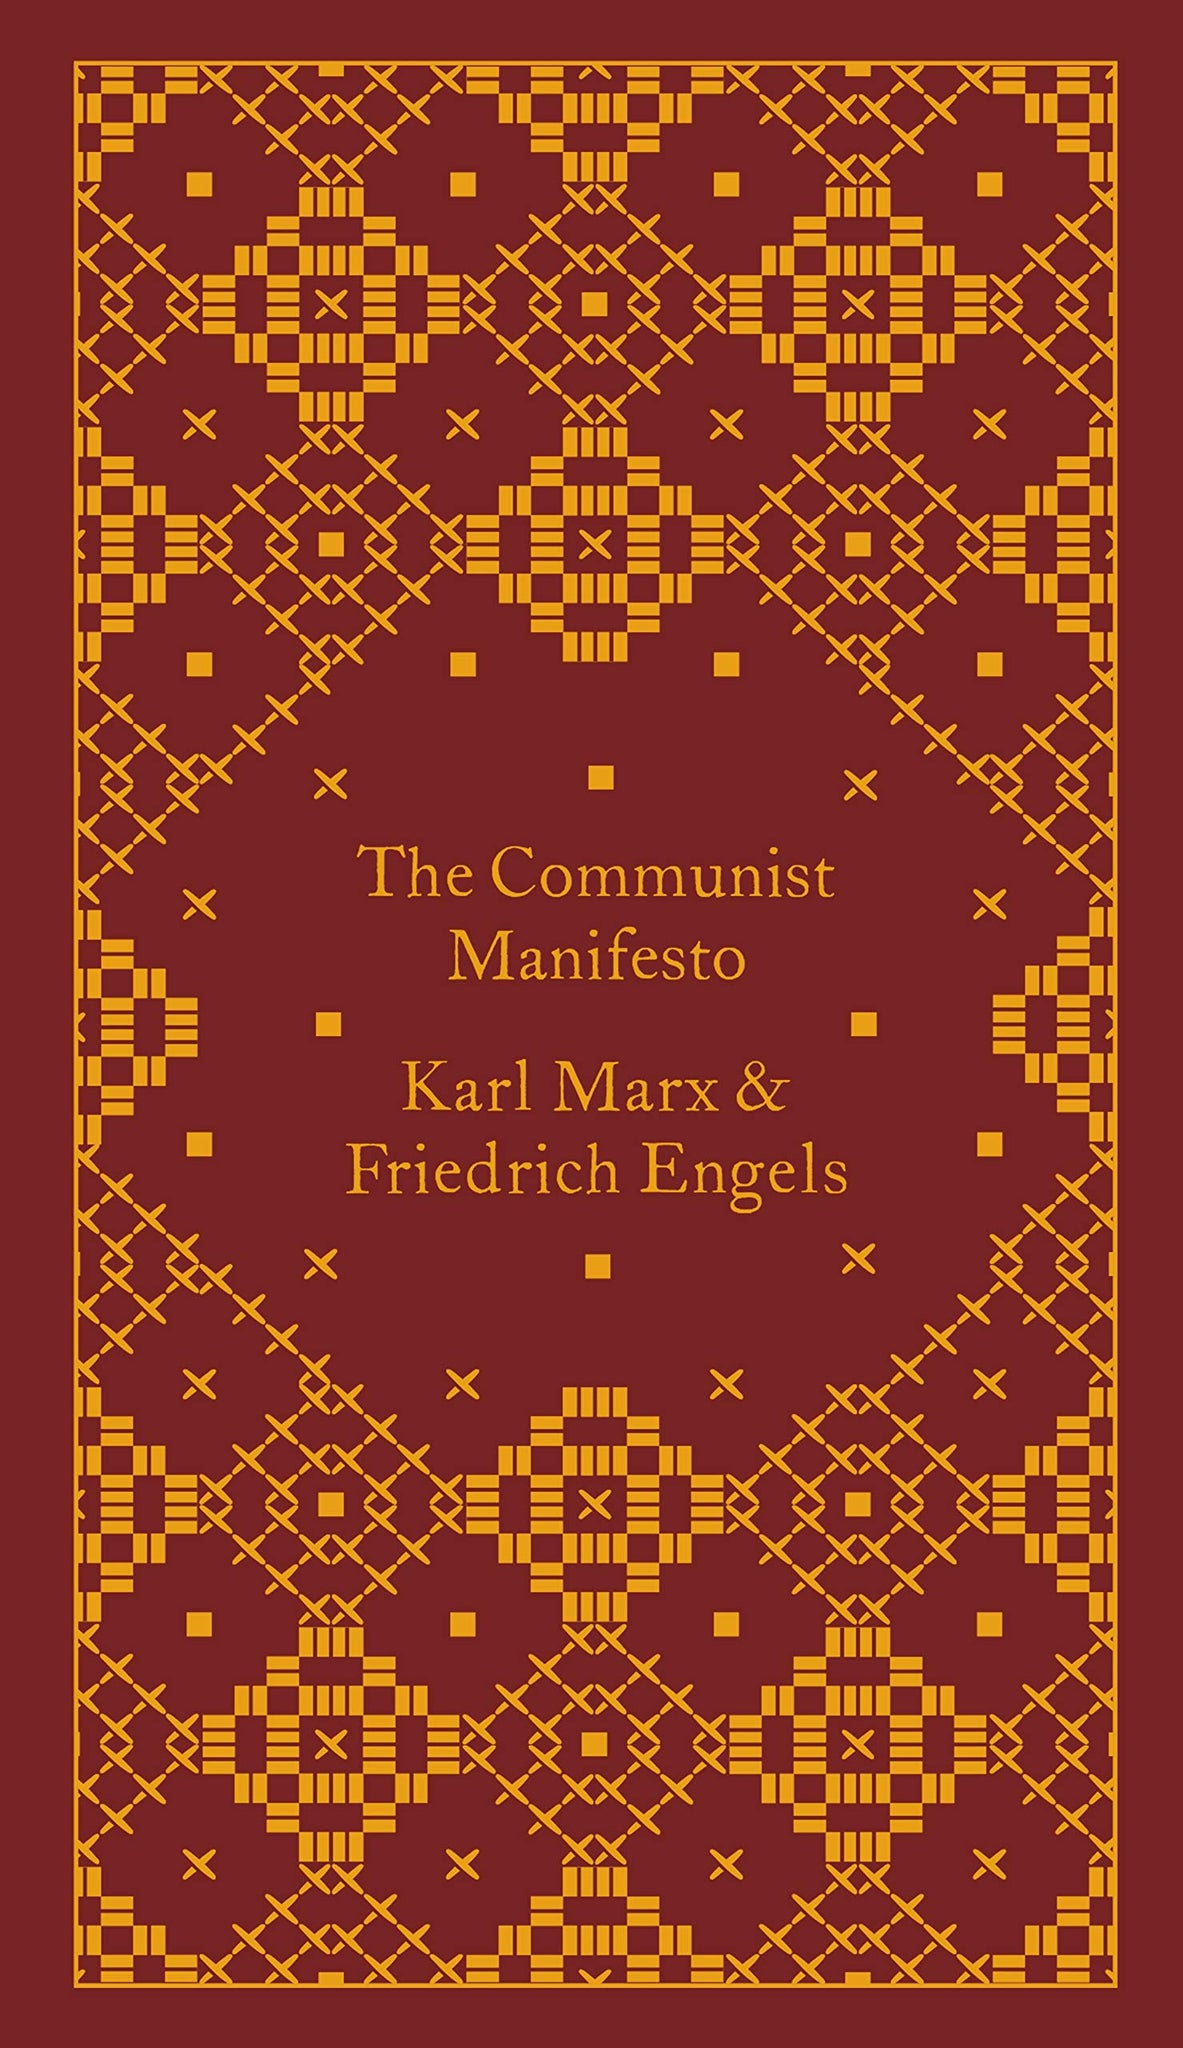 The Communist Manifesto (Penguin Pocket Hardbacks)